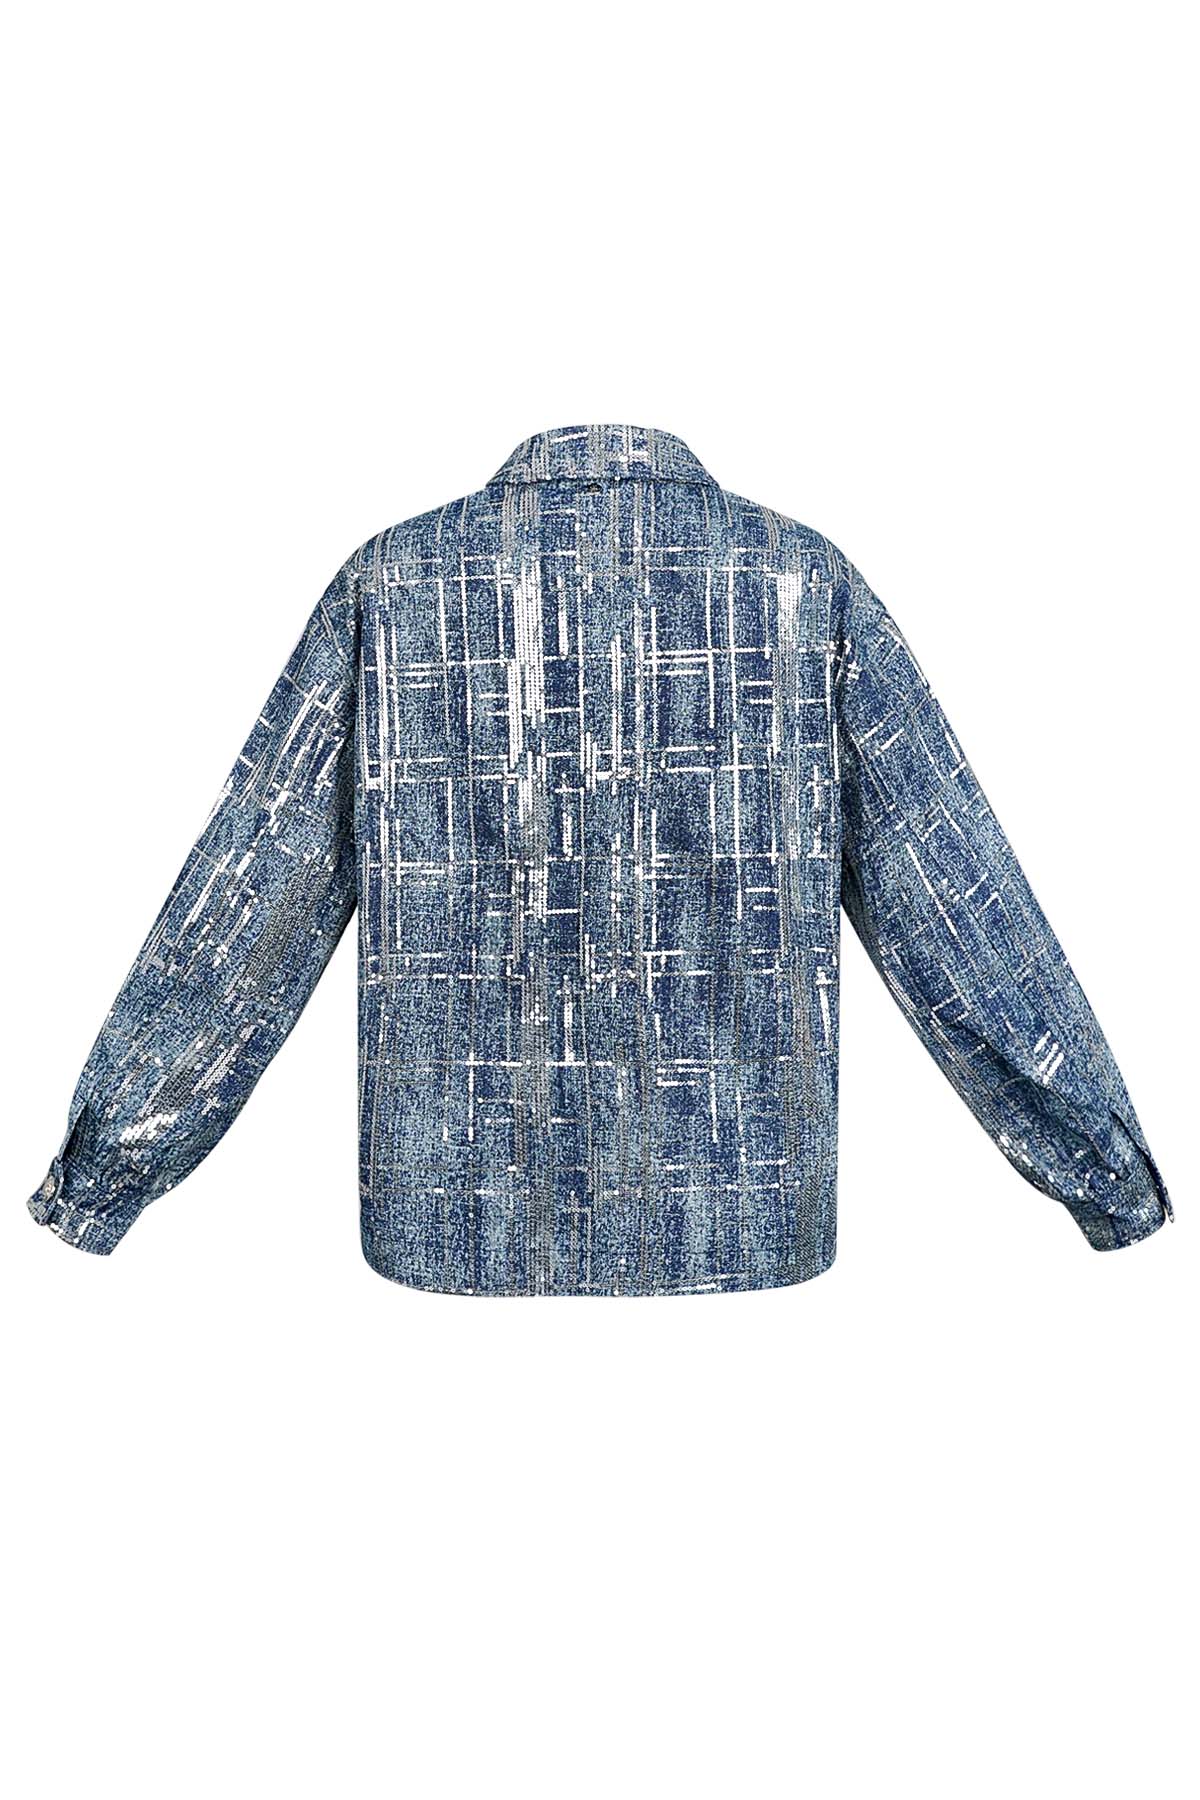 Jacket denim look with sequins - blue - L h5 Picture7